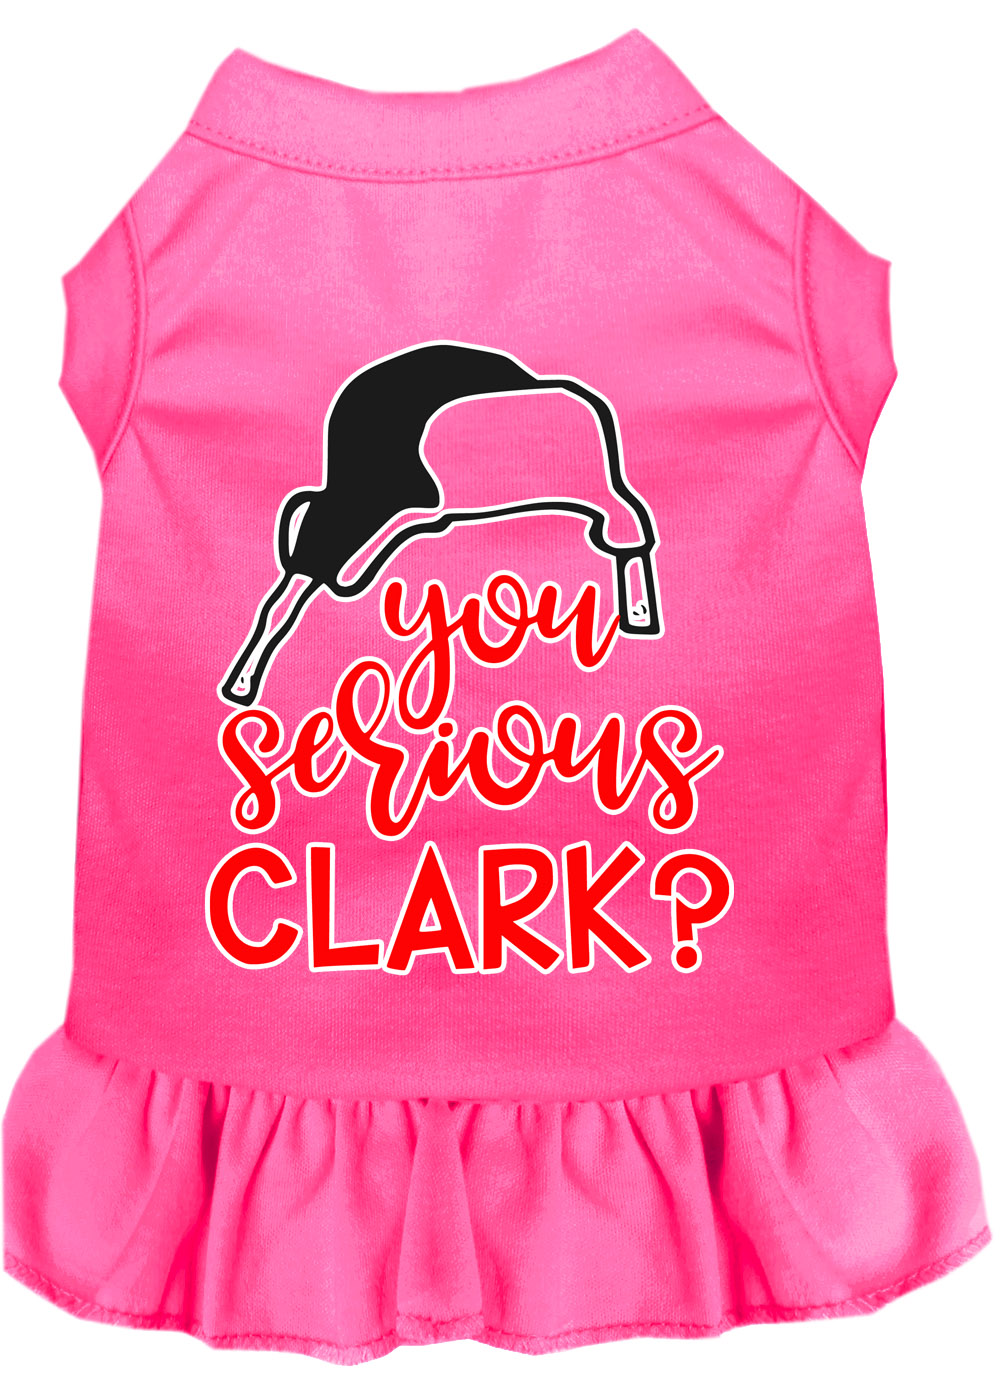 You Serious Clark? Screen Print Dog Dress Bright Pink XXXL